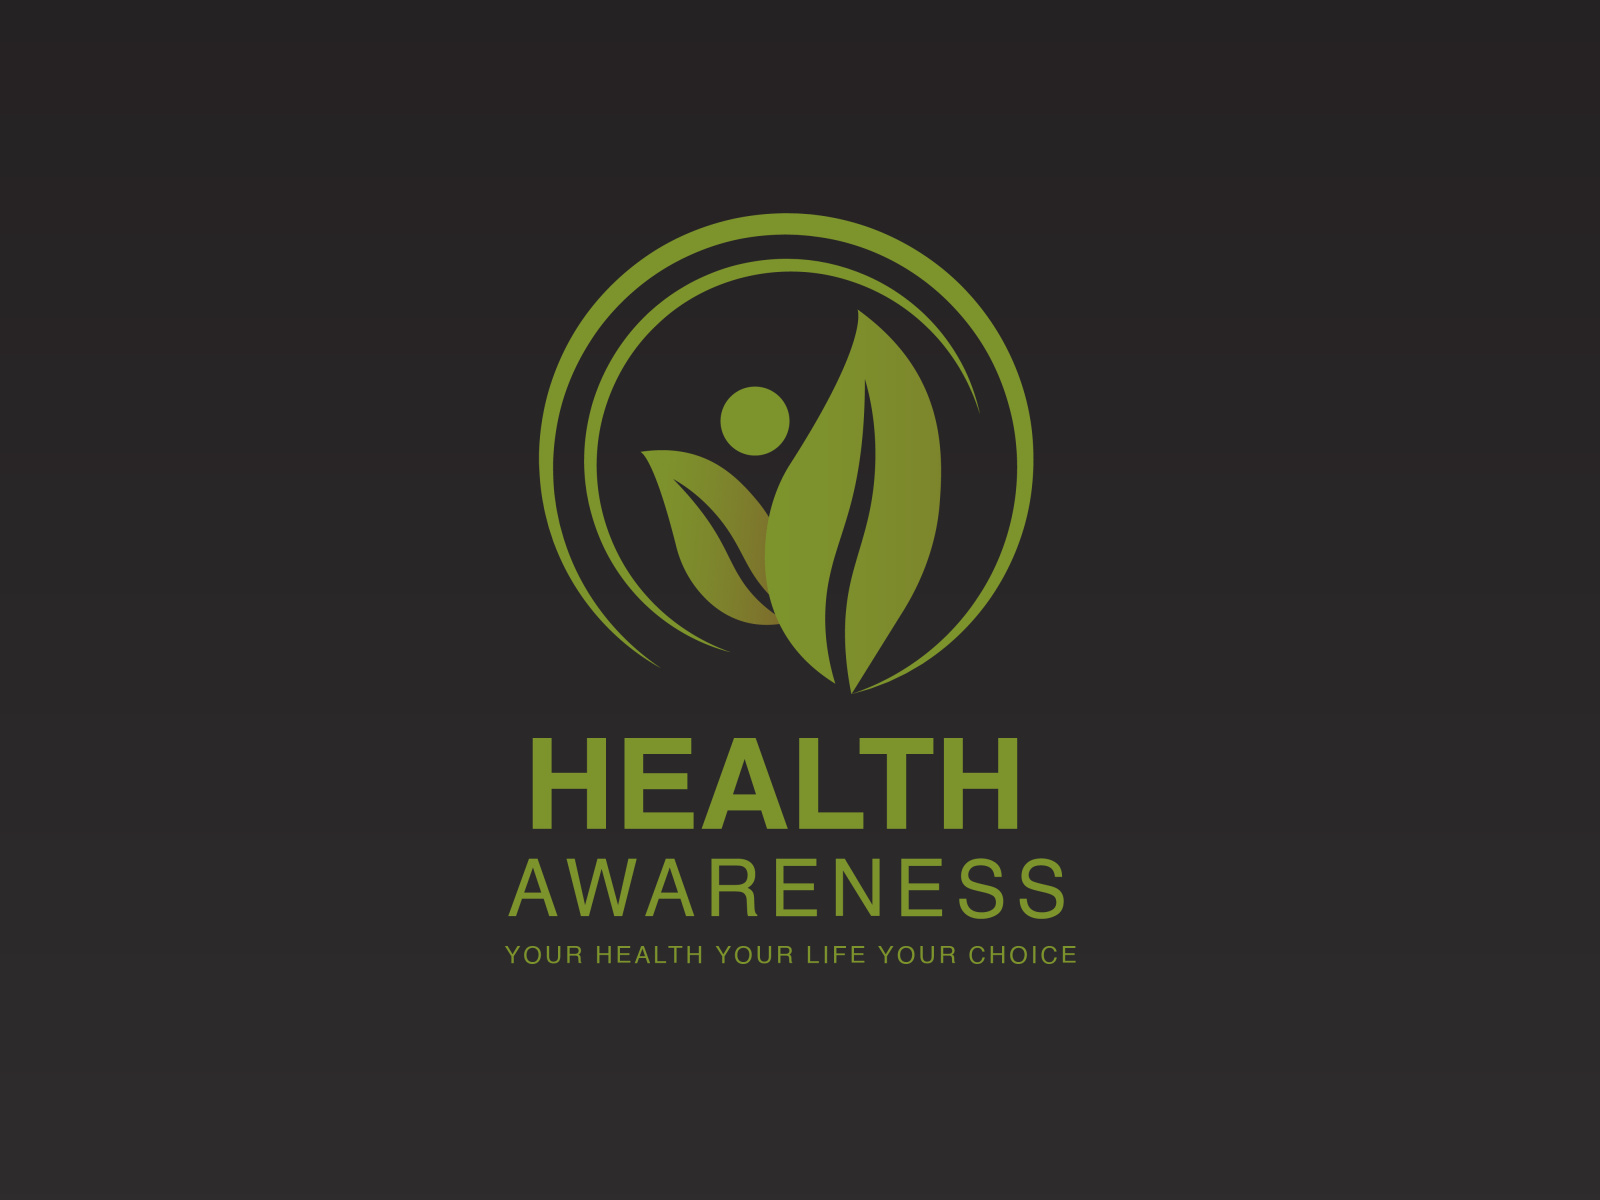 Logo for Health Awareness logo by Idrees Iqbal on Dribbble